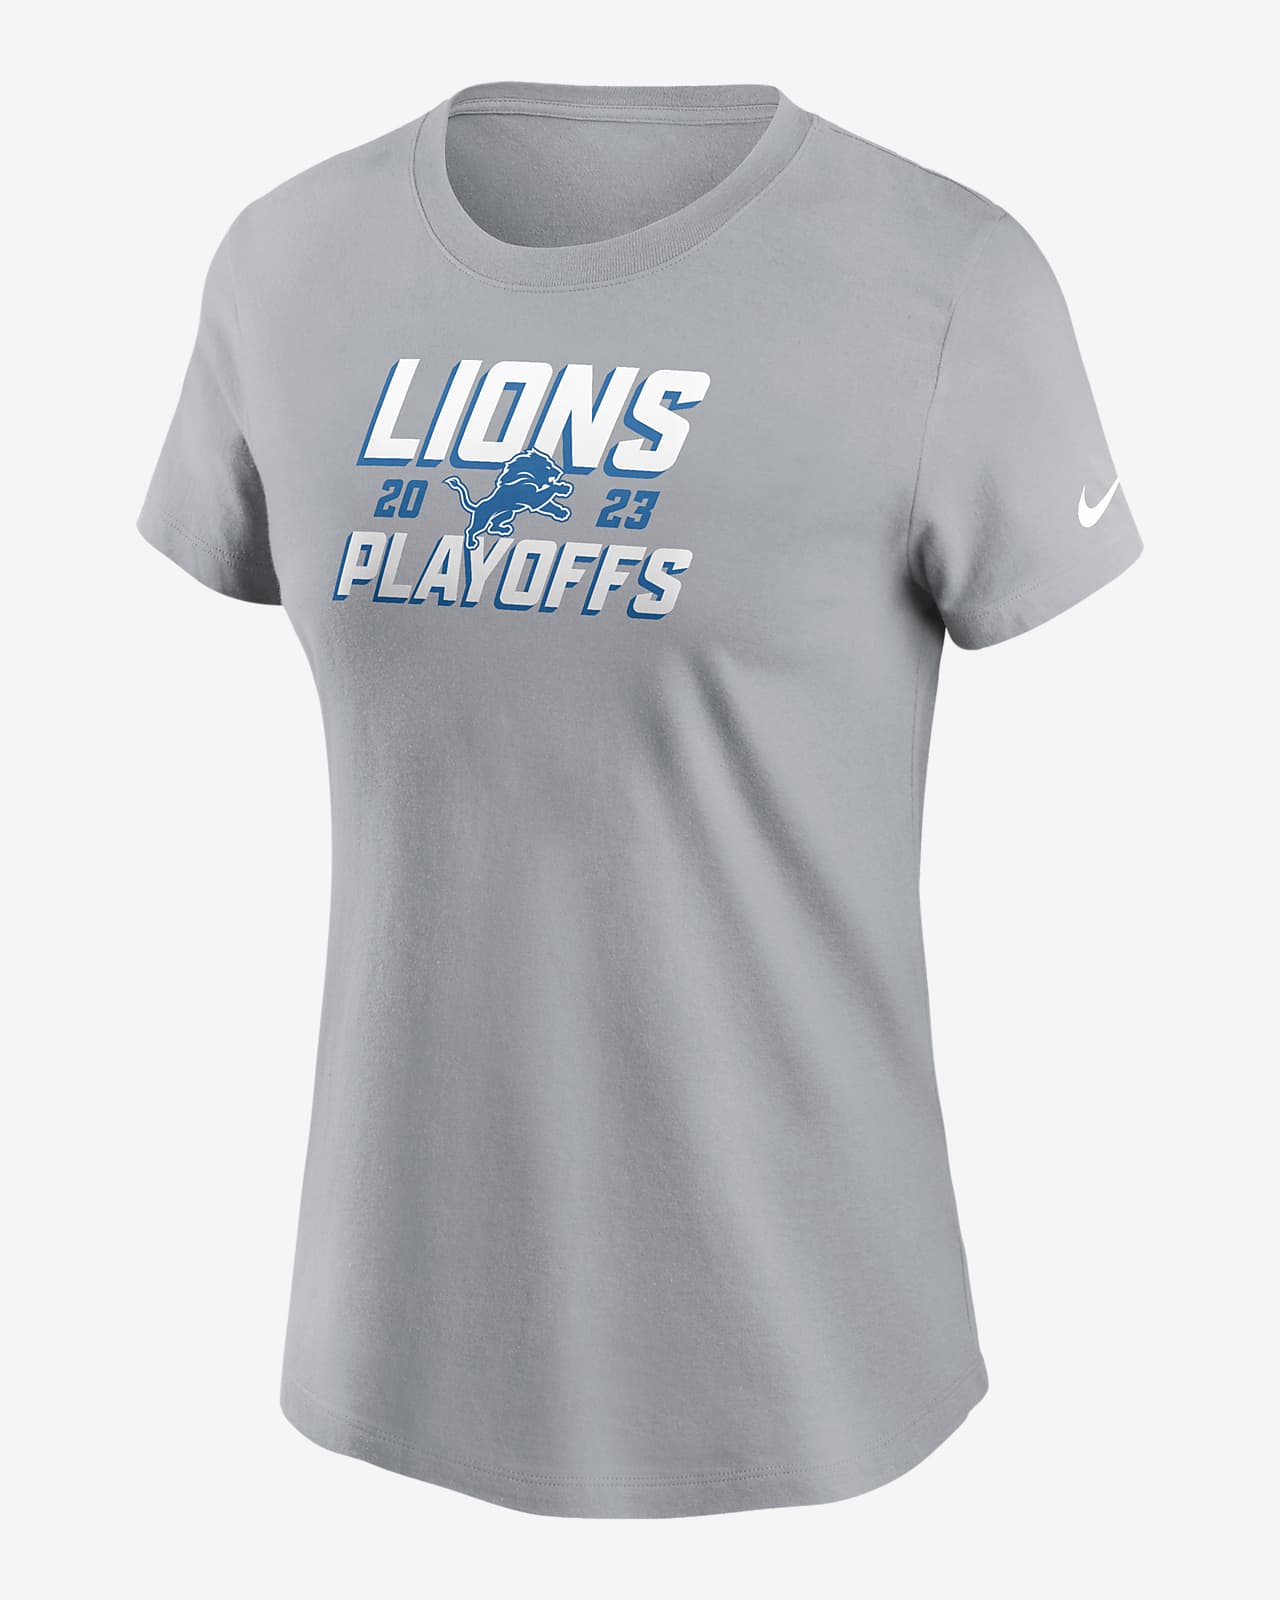 Detroit Lions Shirt Lions Shirt Women or Men Lions Apparel for Women Lions  Sunday Funday Game Day Detroit Football Shirt